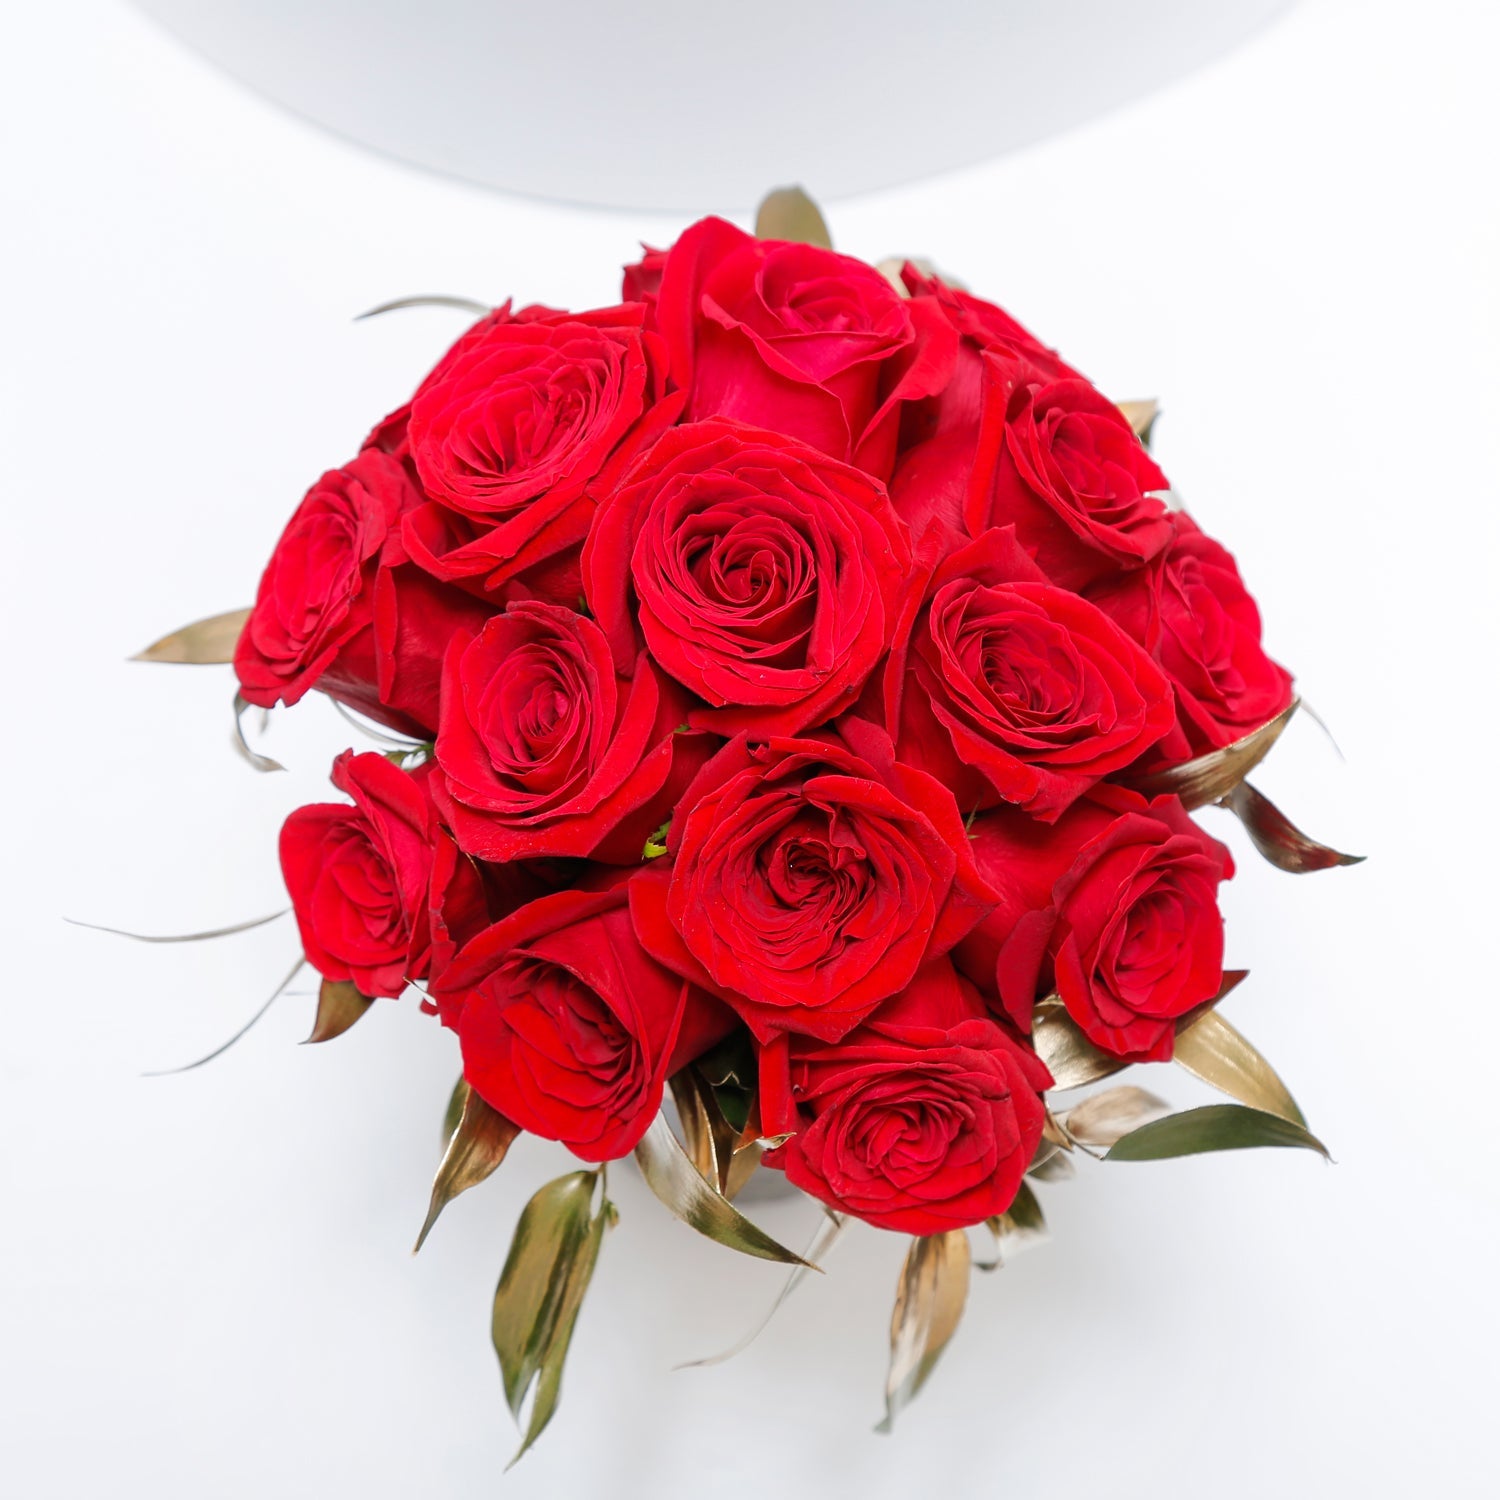 Red Roses Arrangement with Umrah Mubarak Topper